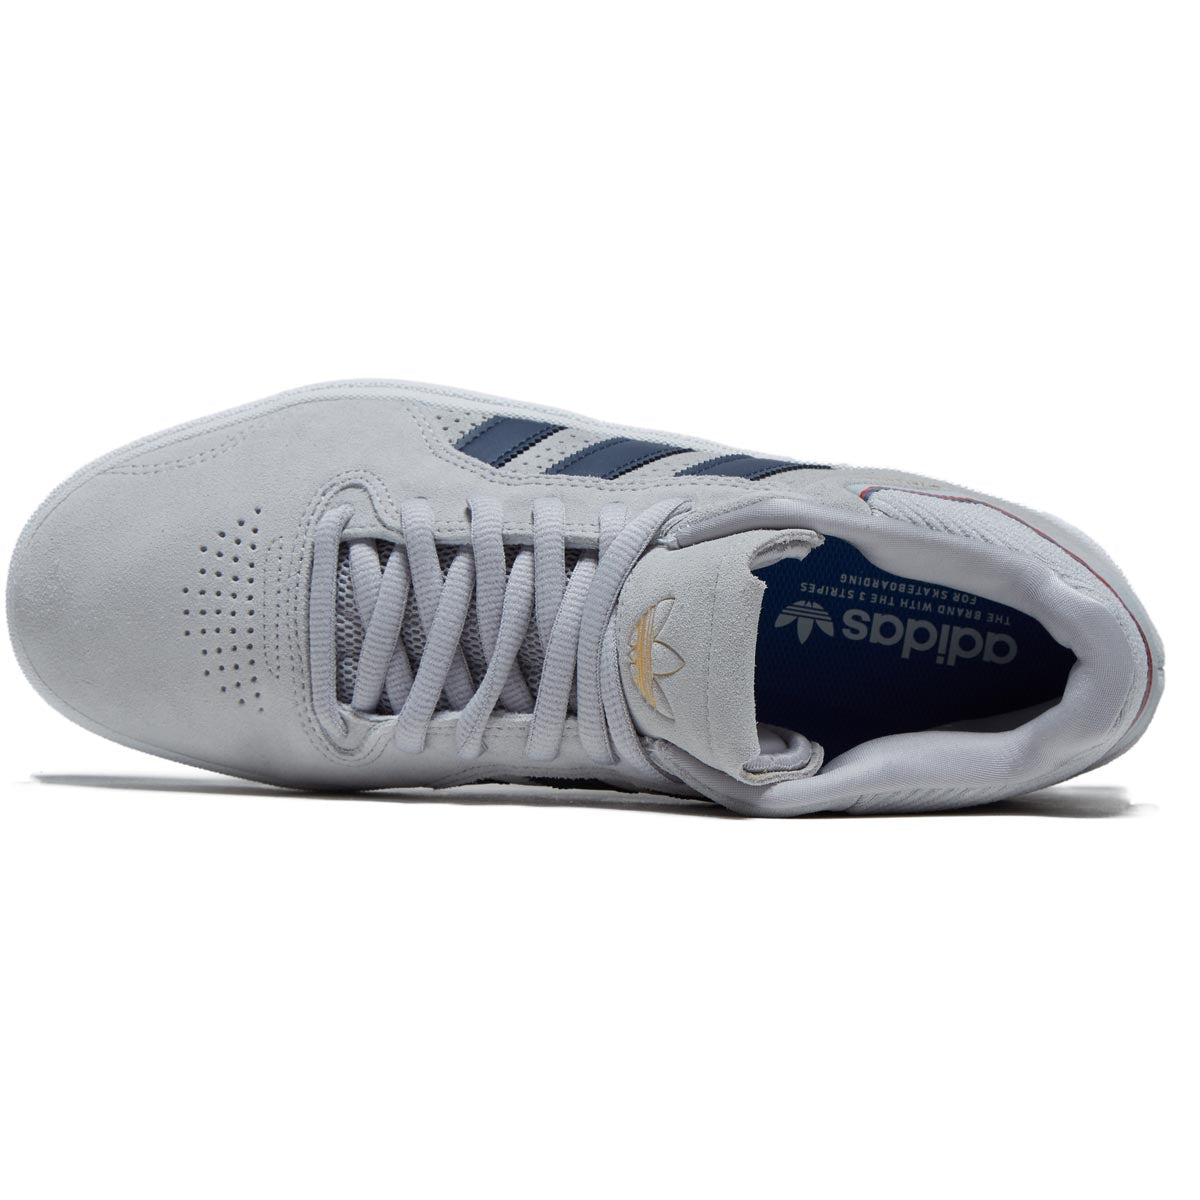 Adidas Tyshawn Shoes - Grey/Collegiate Navy/Gold Metallic image 3